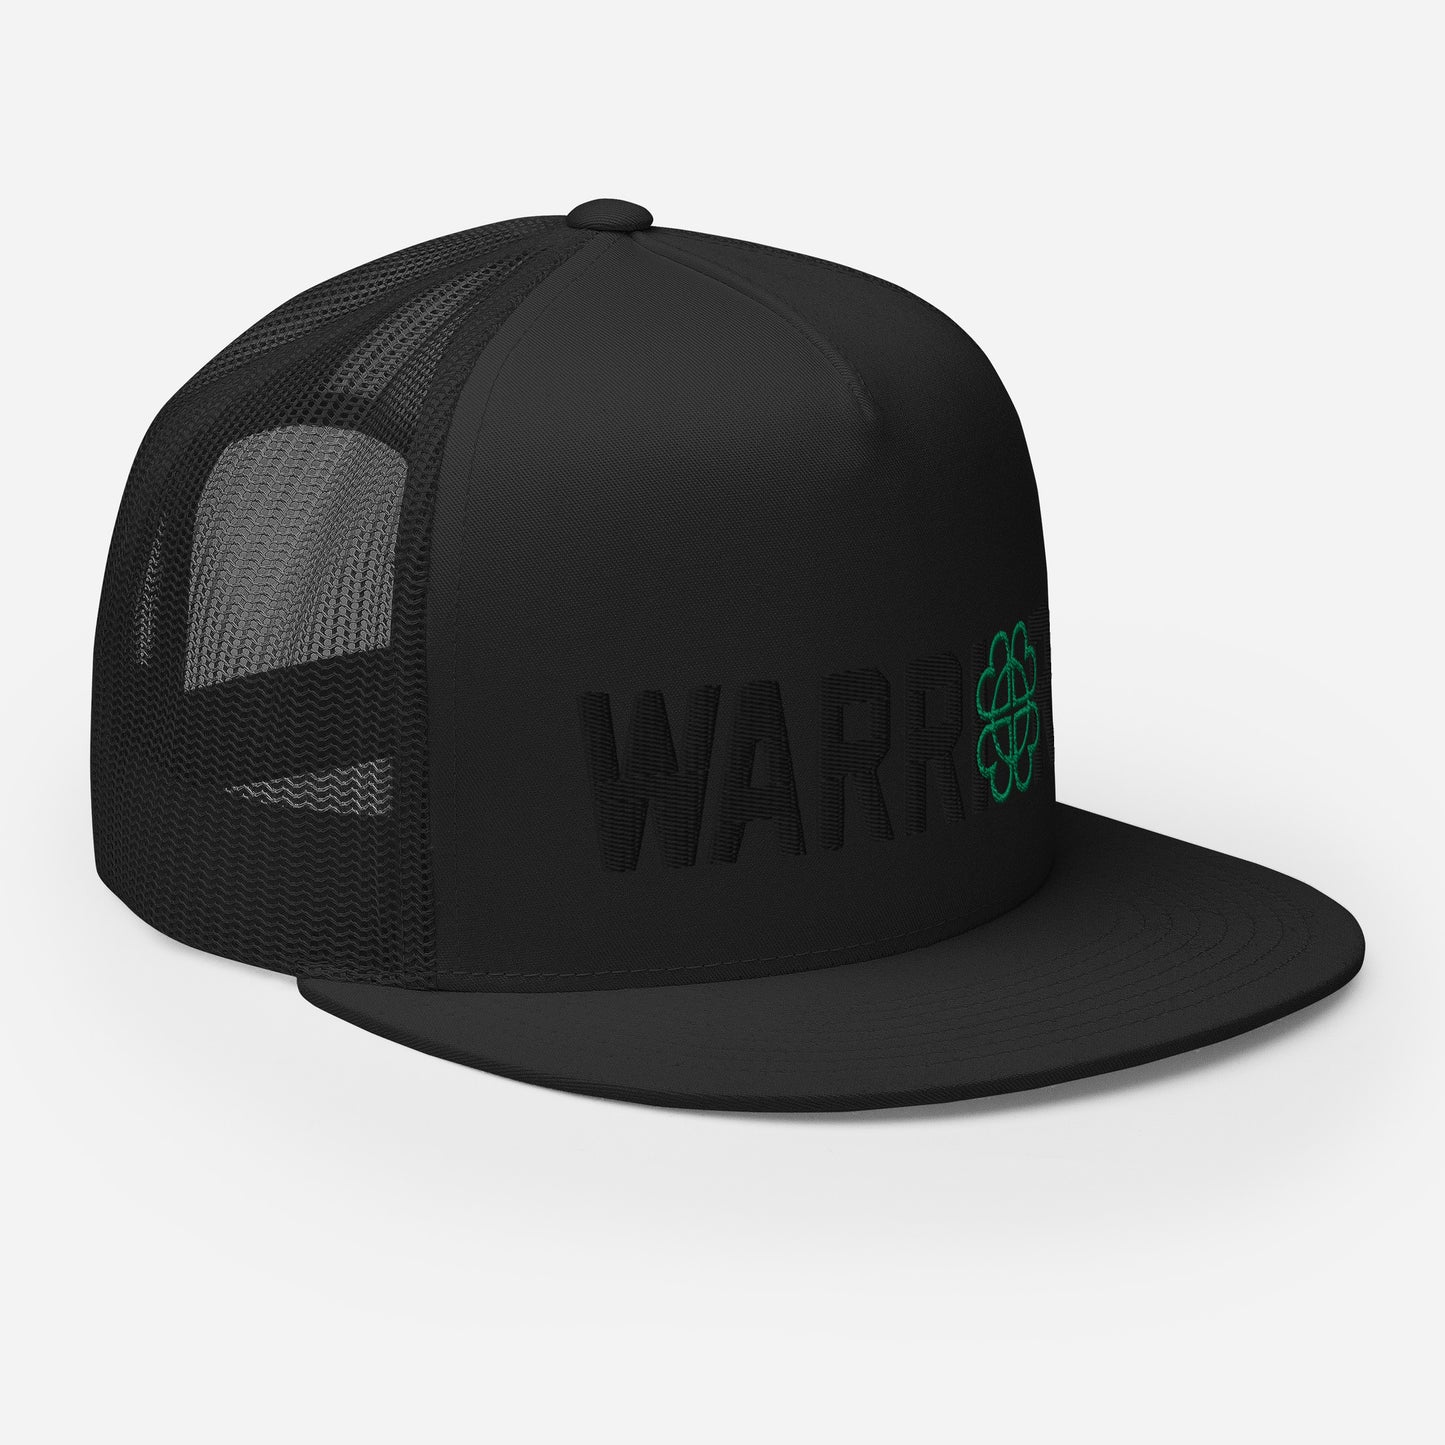 Black Trucker Hat with Green Logo